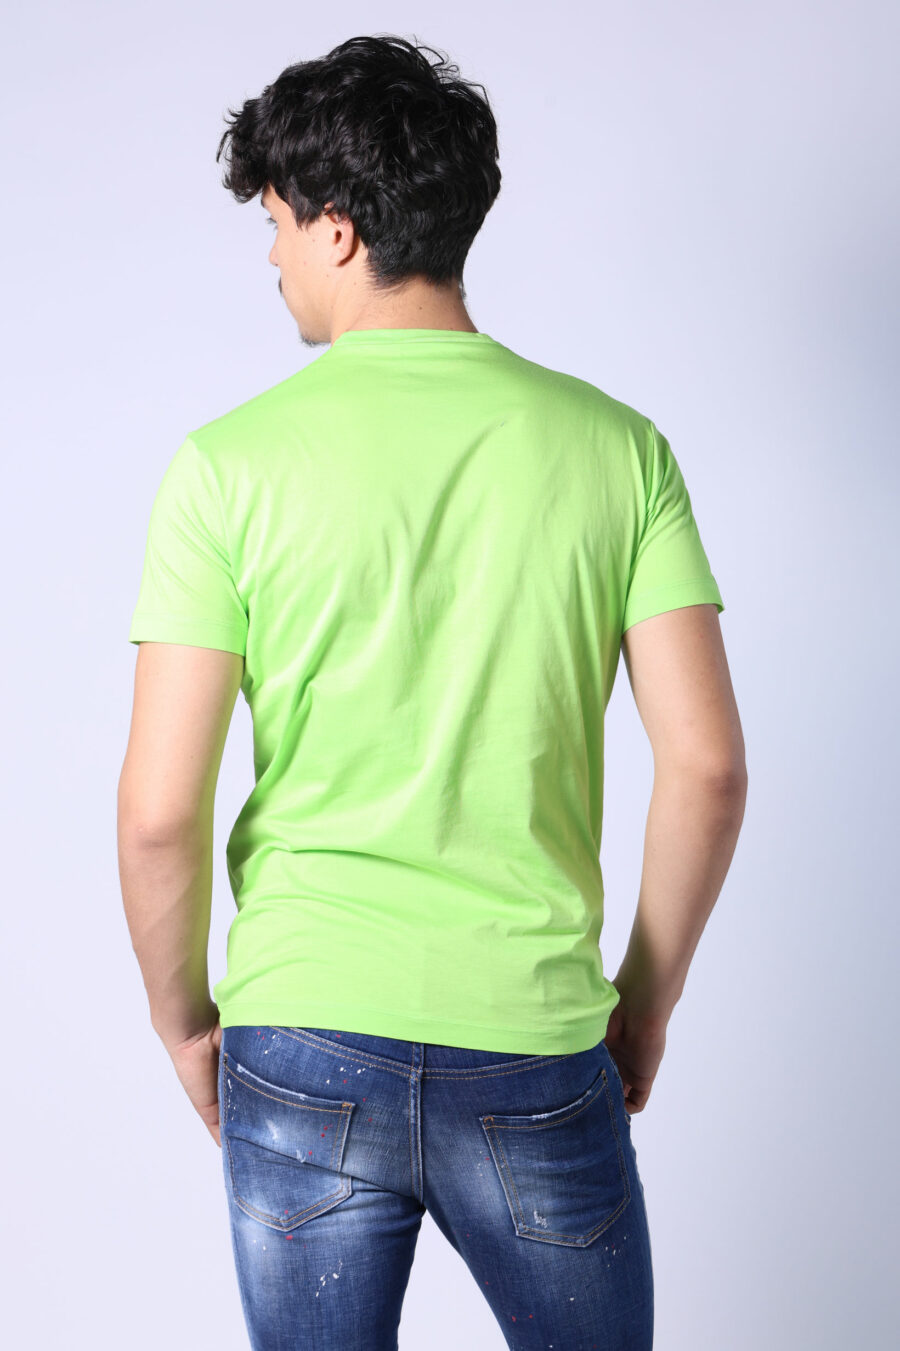 T-shirt vert citron avec maxilogo "icon" noir - Untitled Catalog 05397